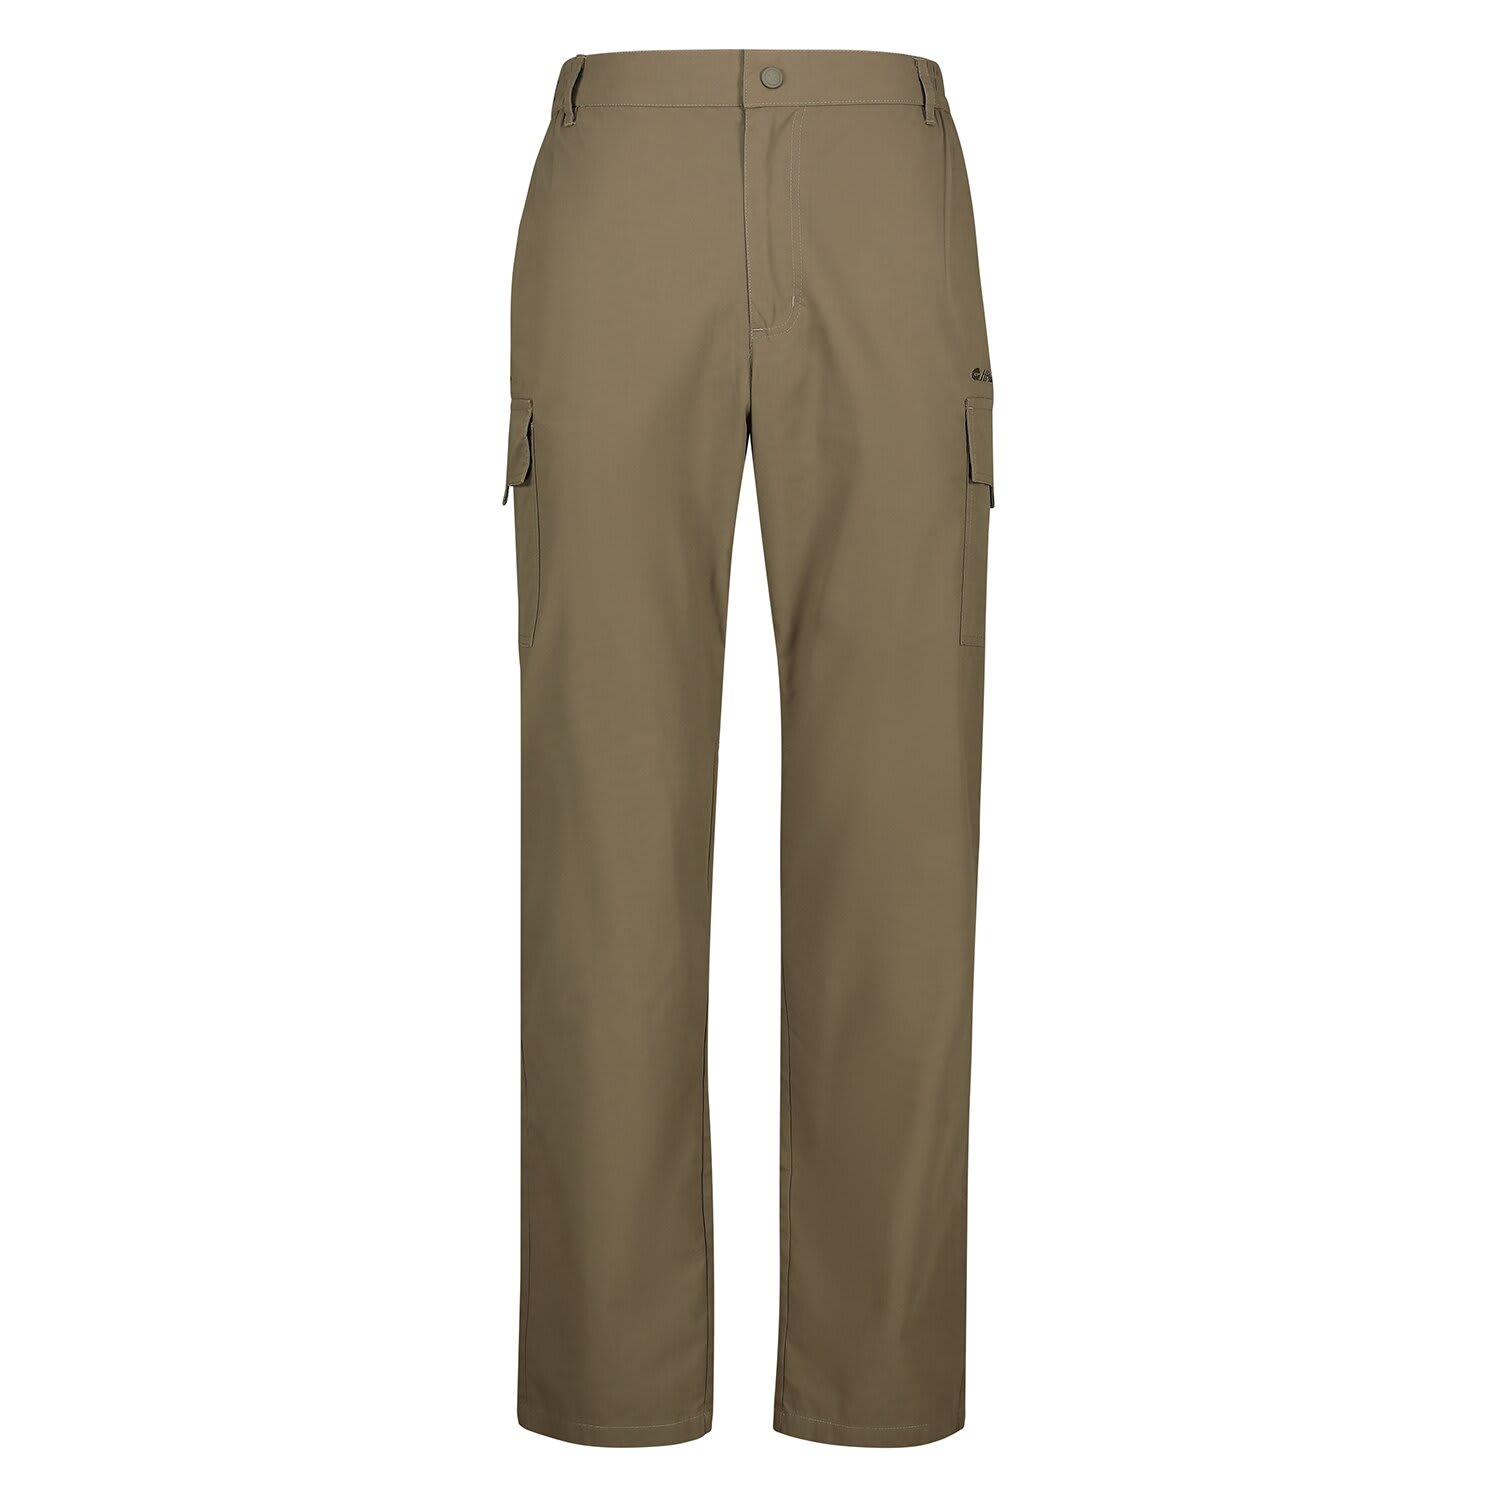 Hi-Tec Men's Utility Pants | 1013564 | Outdoor Warehouse